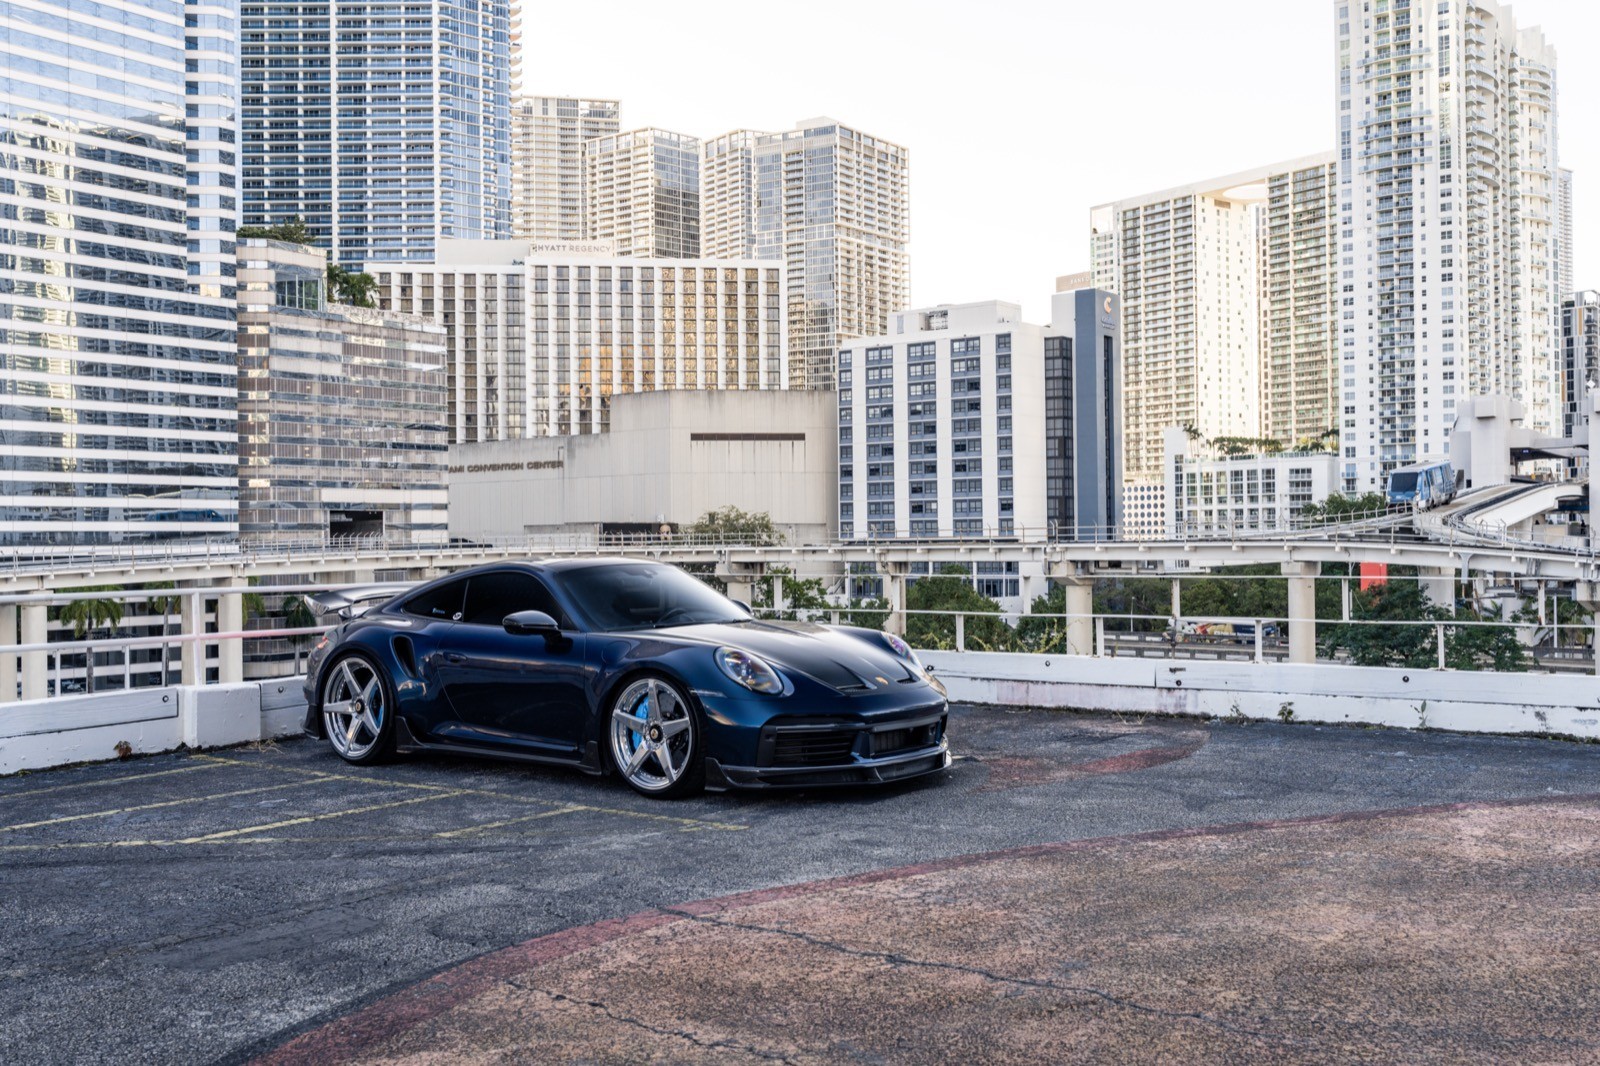 911 Turbo GT3 influences